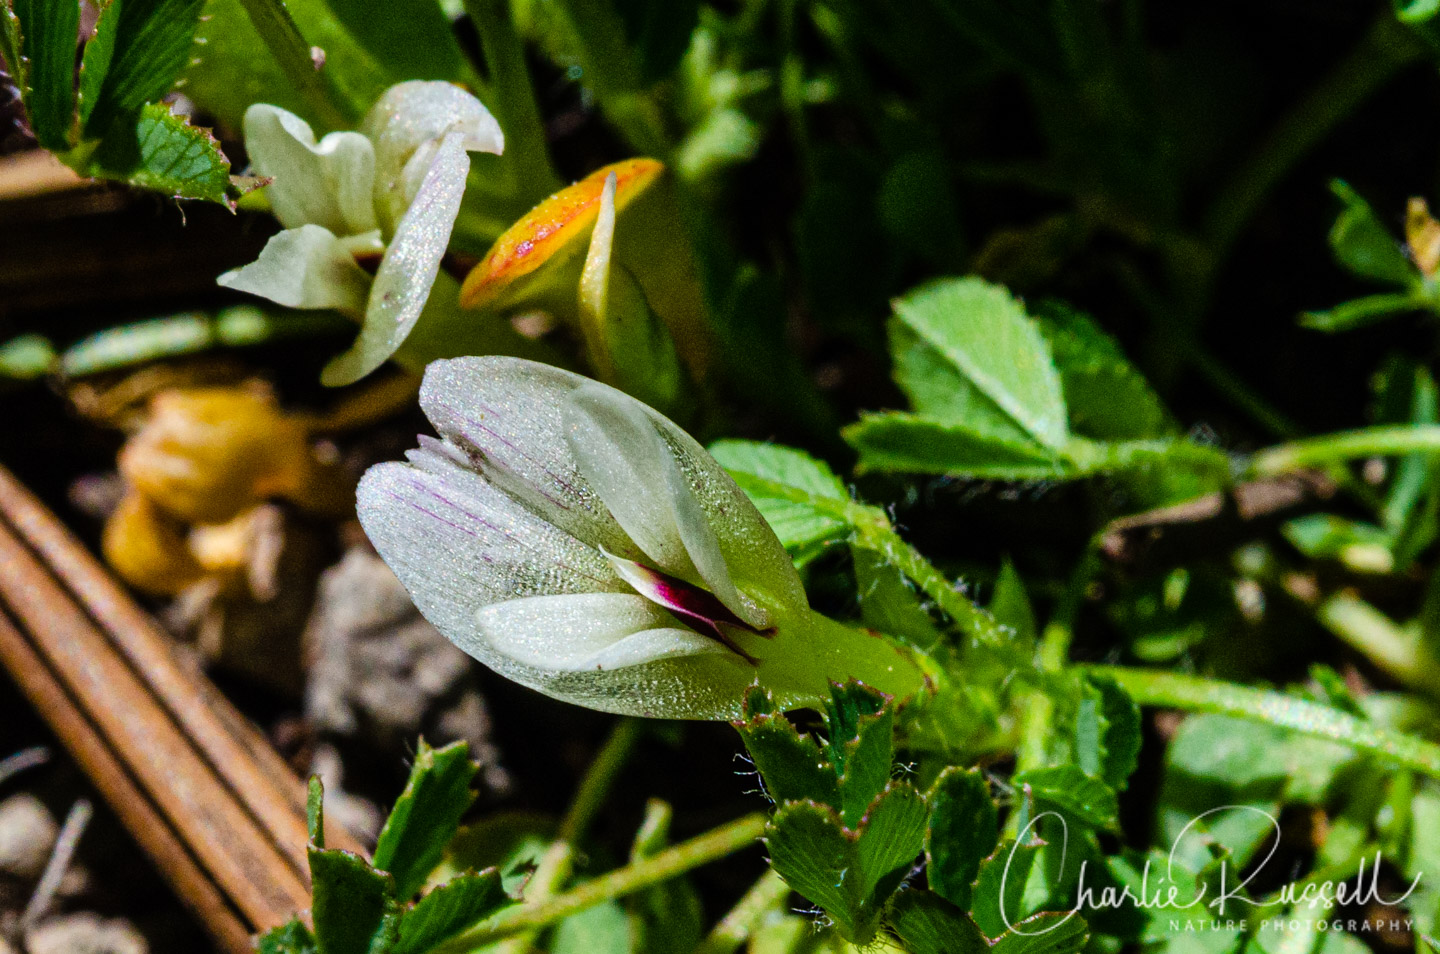 Mountain carpet clover, Trifolium monanthum